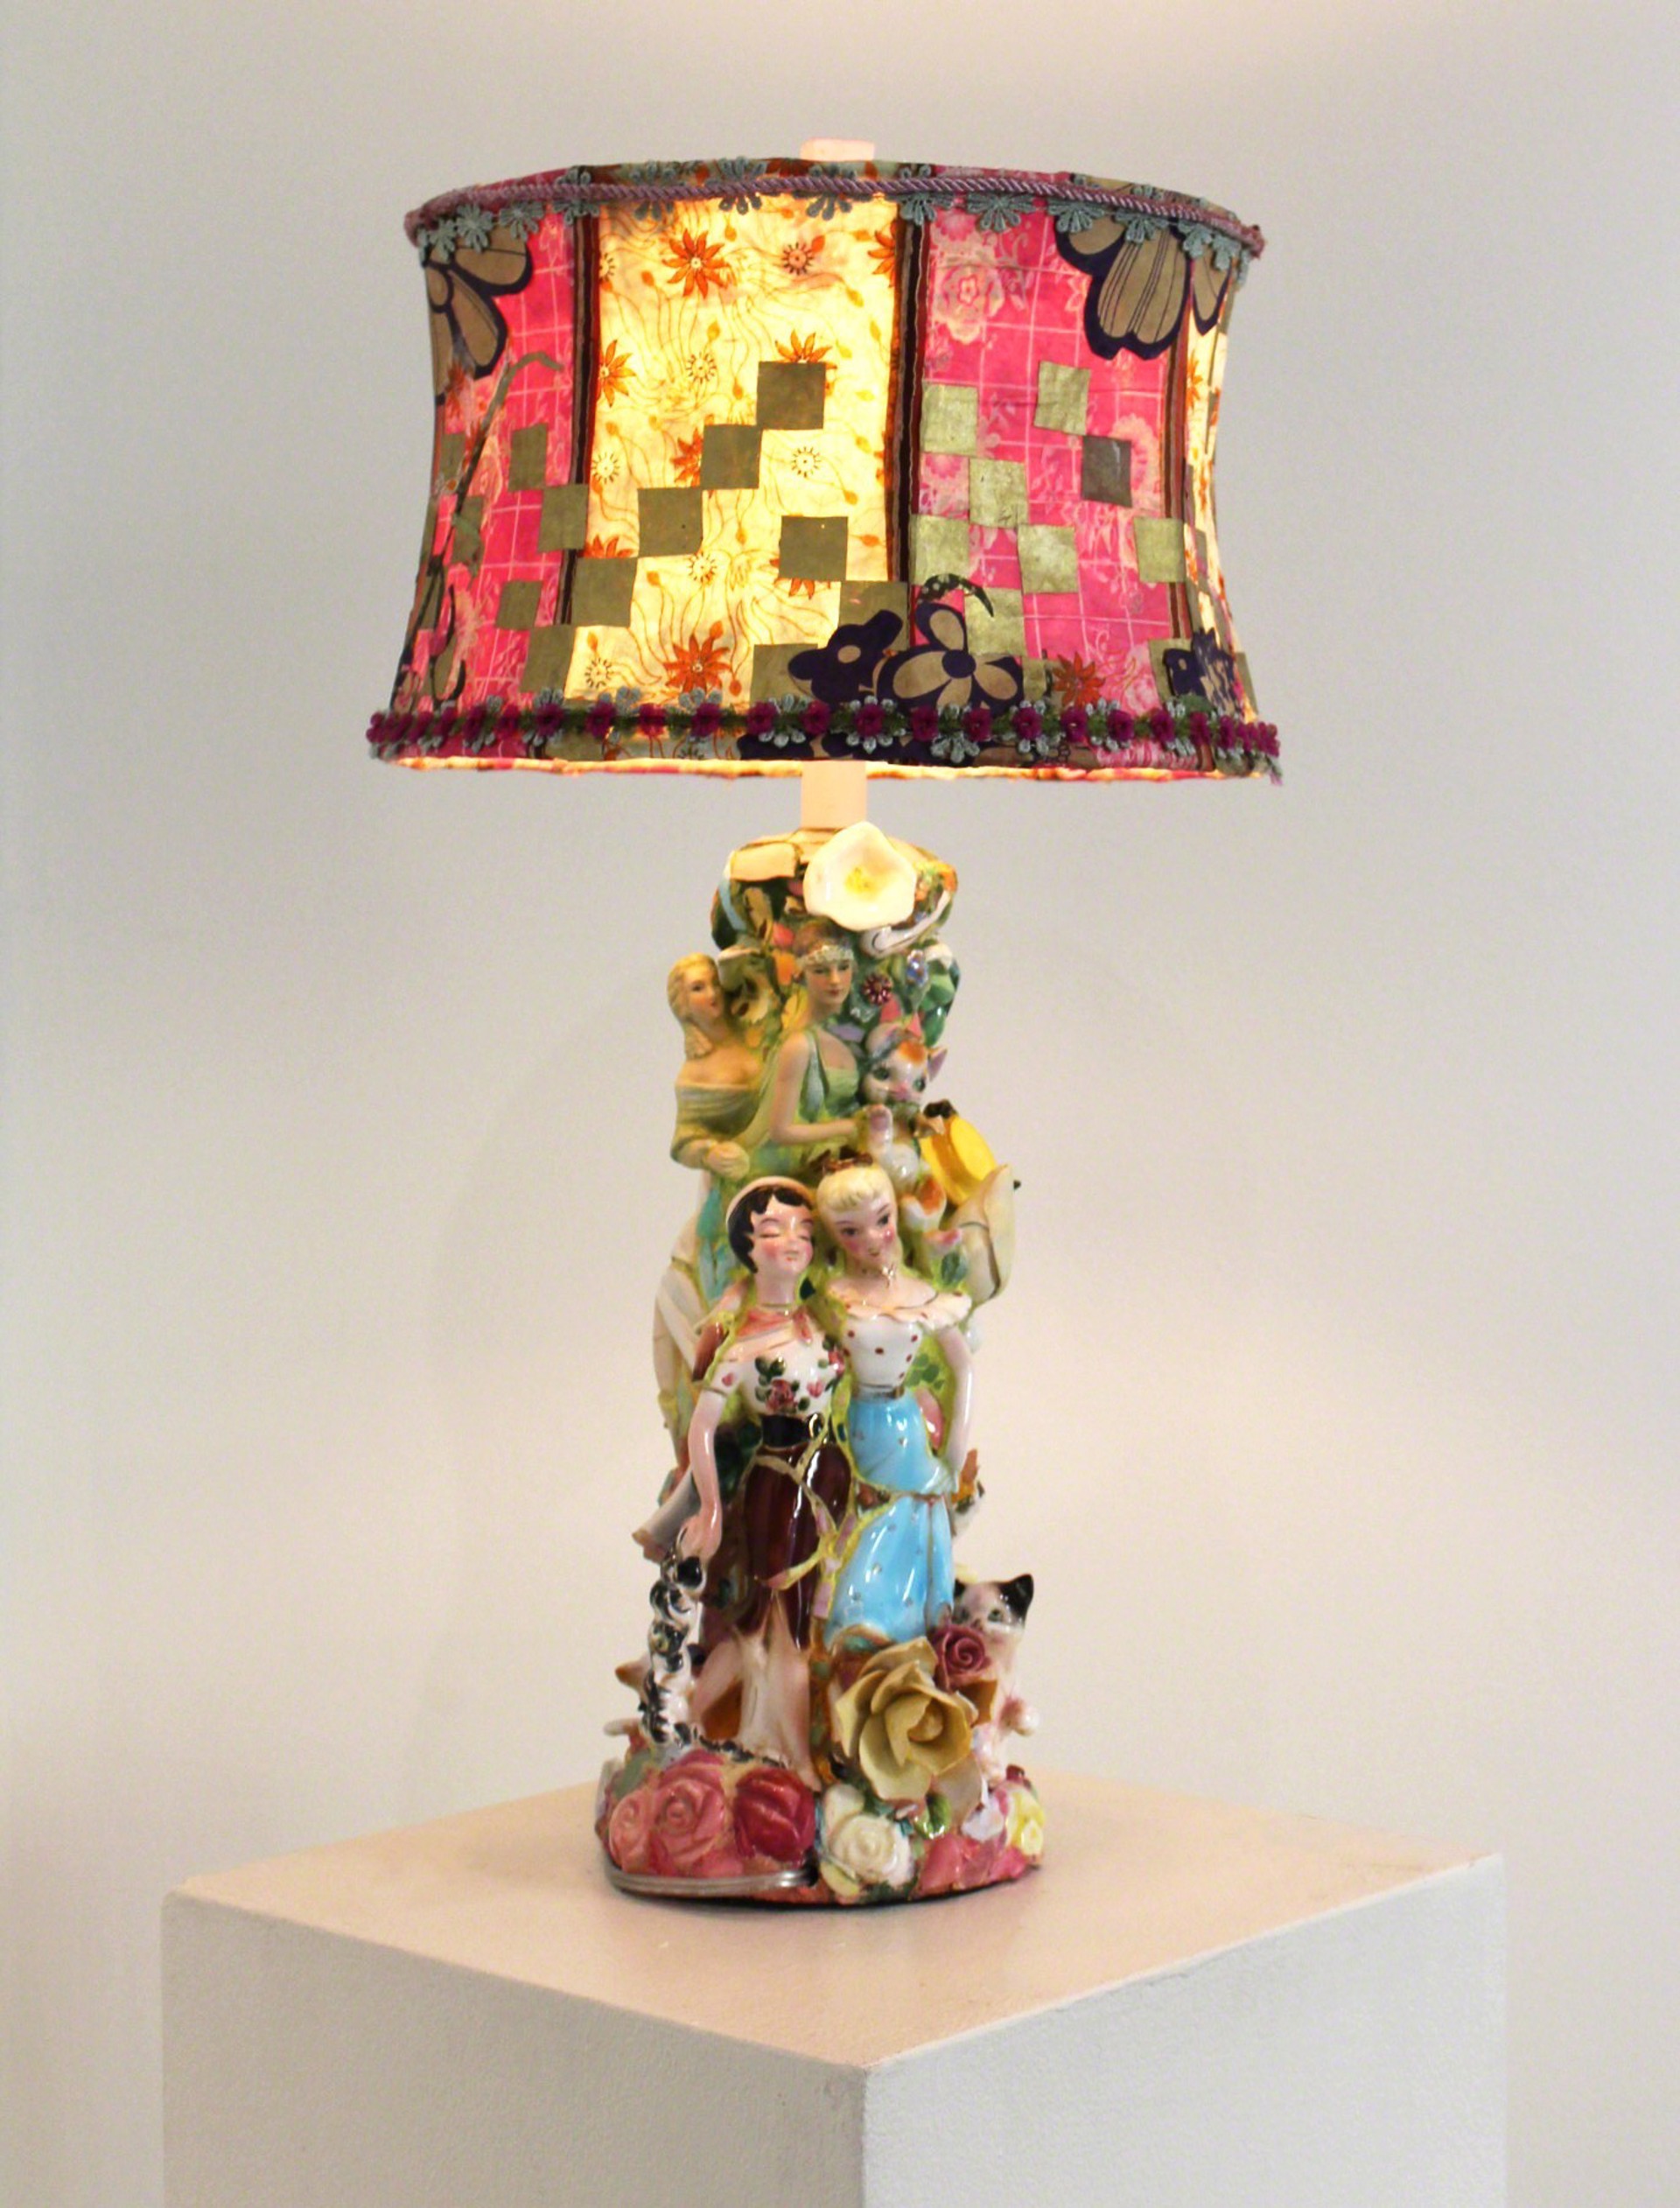 The L Lamp by Shannon Landis Hansen